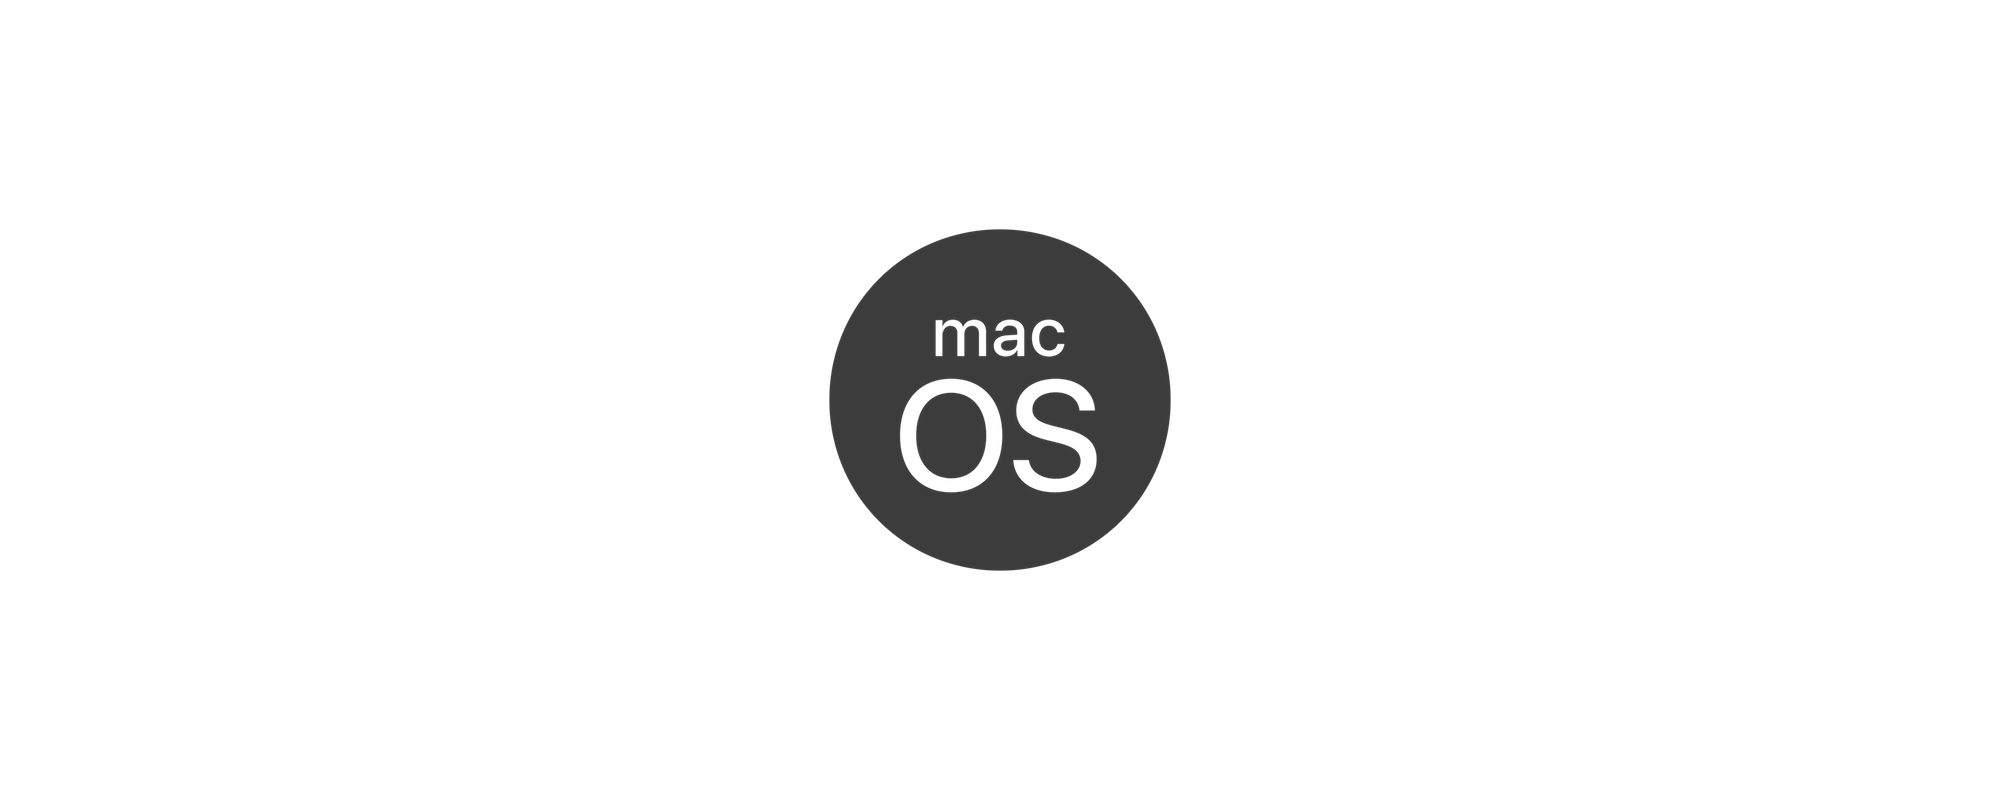 Mac OS 개발 환경 설정 Guide